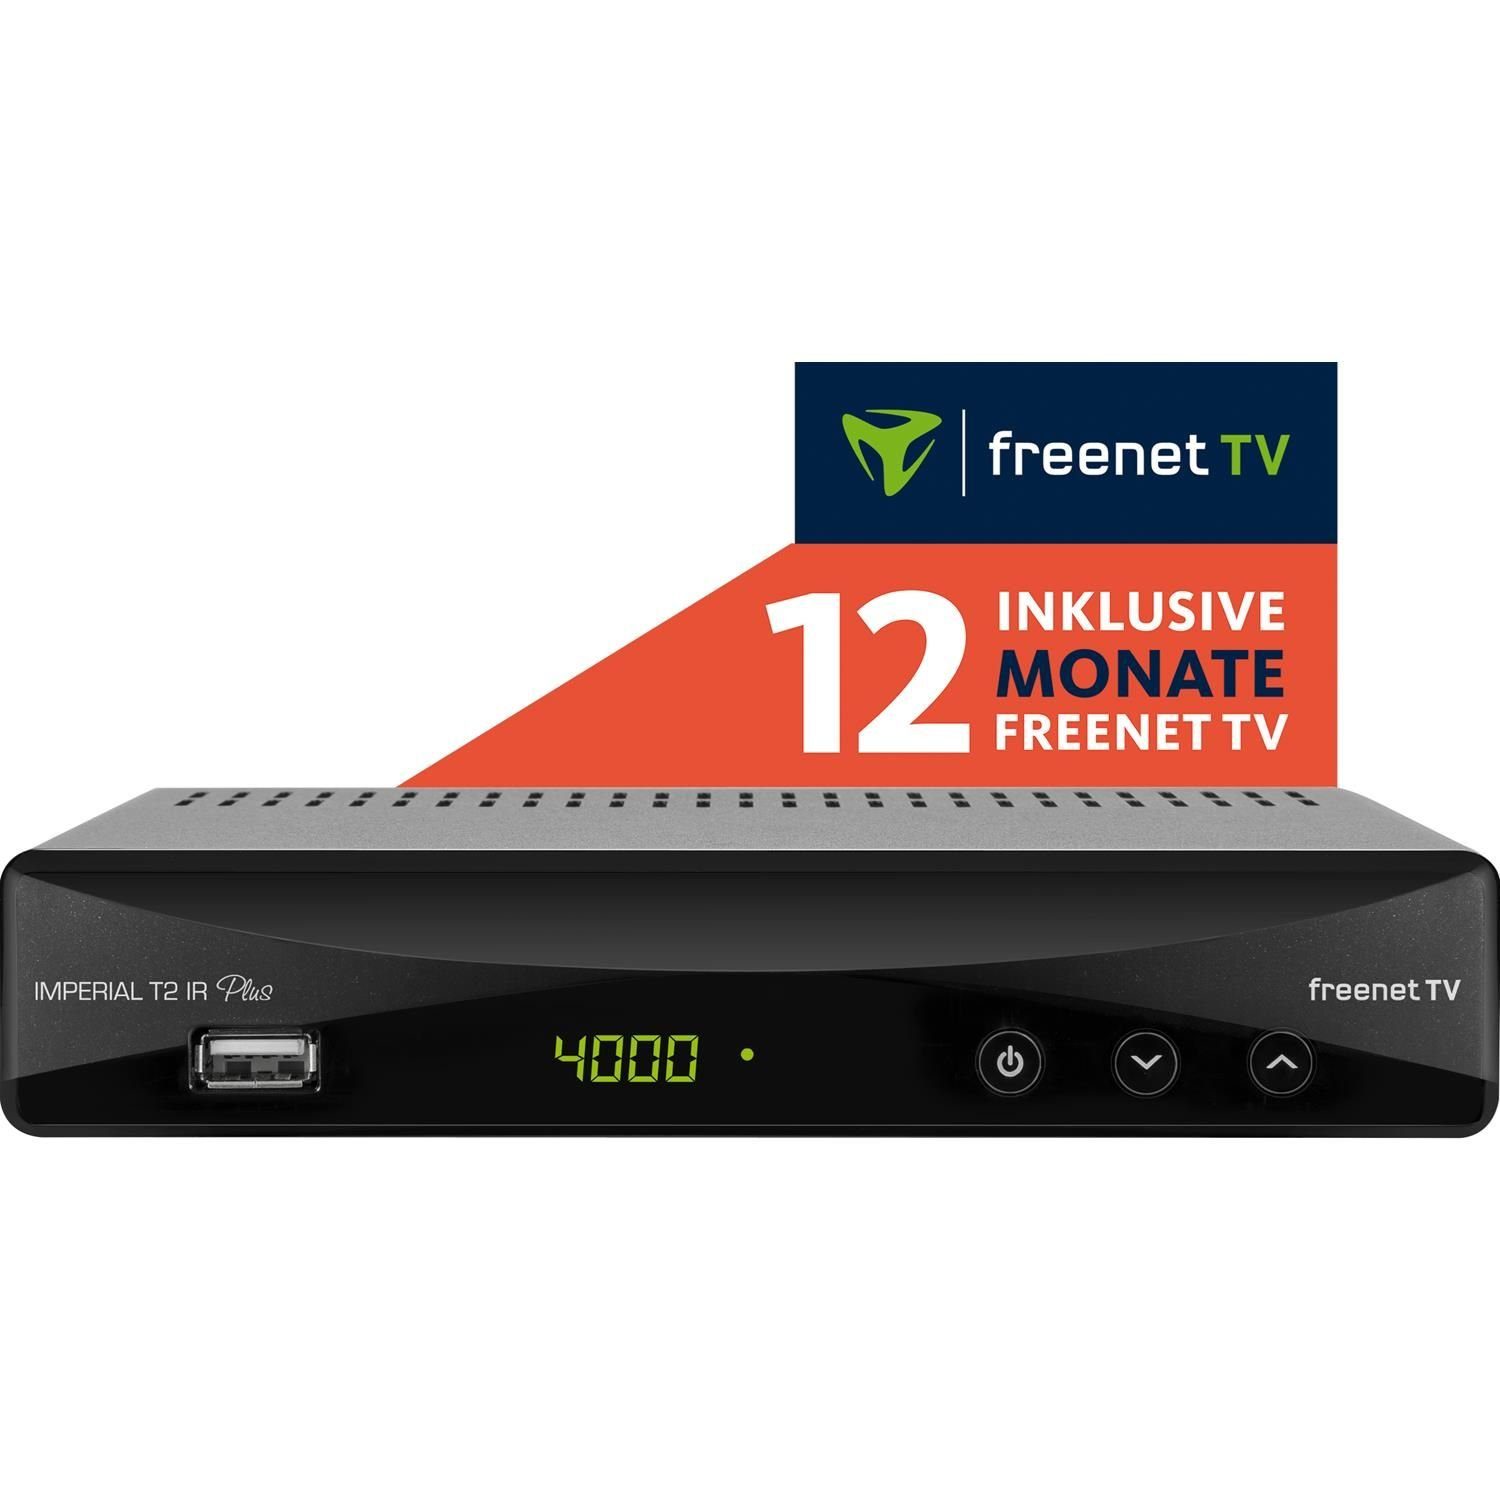 HD freenet Monate DVB-T2 DVB-T2 Mediaplayer Plus 12 IMPERIAL diverse inkl. by Receiver Formate) für T2 TV¹ TELESTAR HD IR (RJ45 Receiver Netzwerkbuchse,